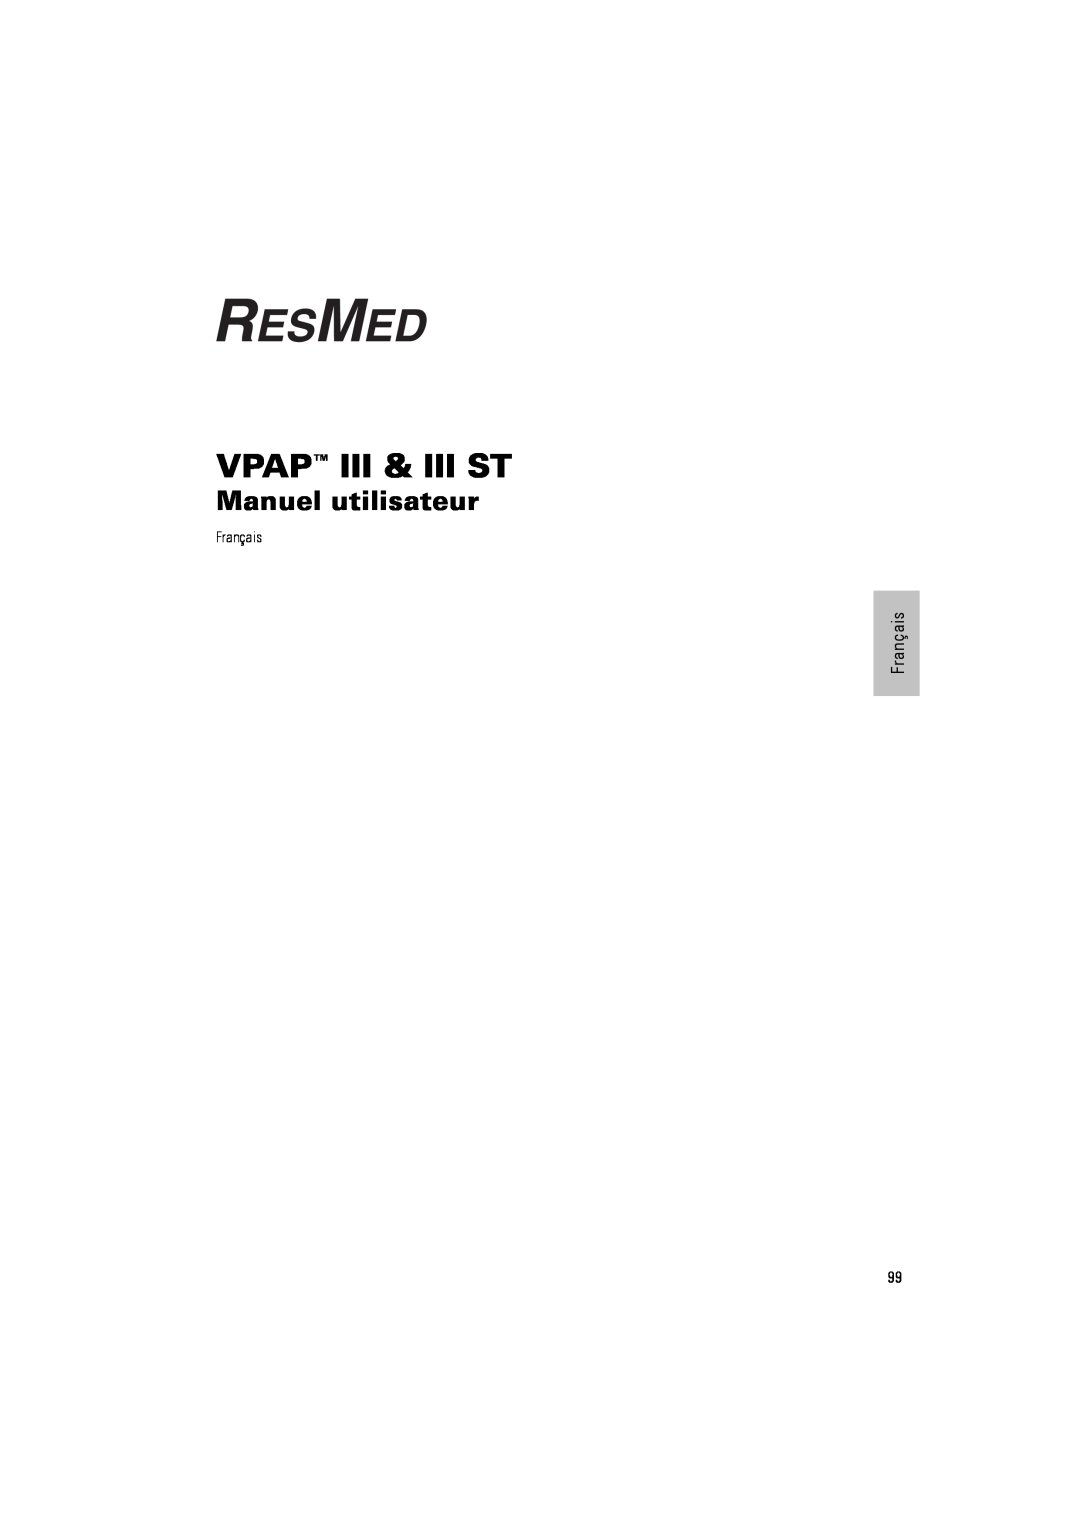 ResMed III & III ST user manual Manuel utilisateur, Vpap Iii & Iii St, Français 